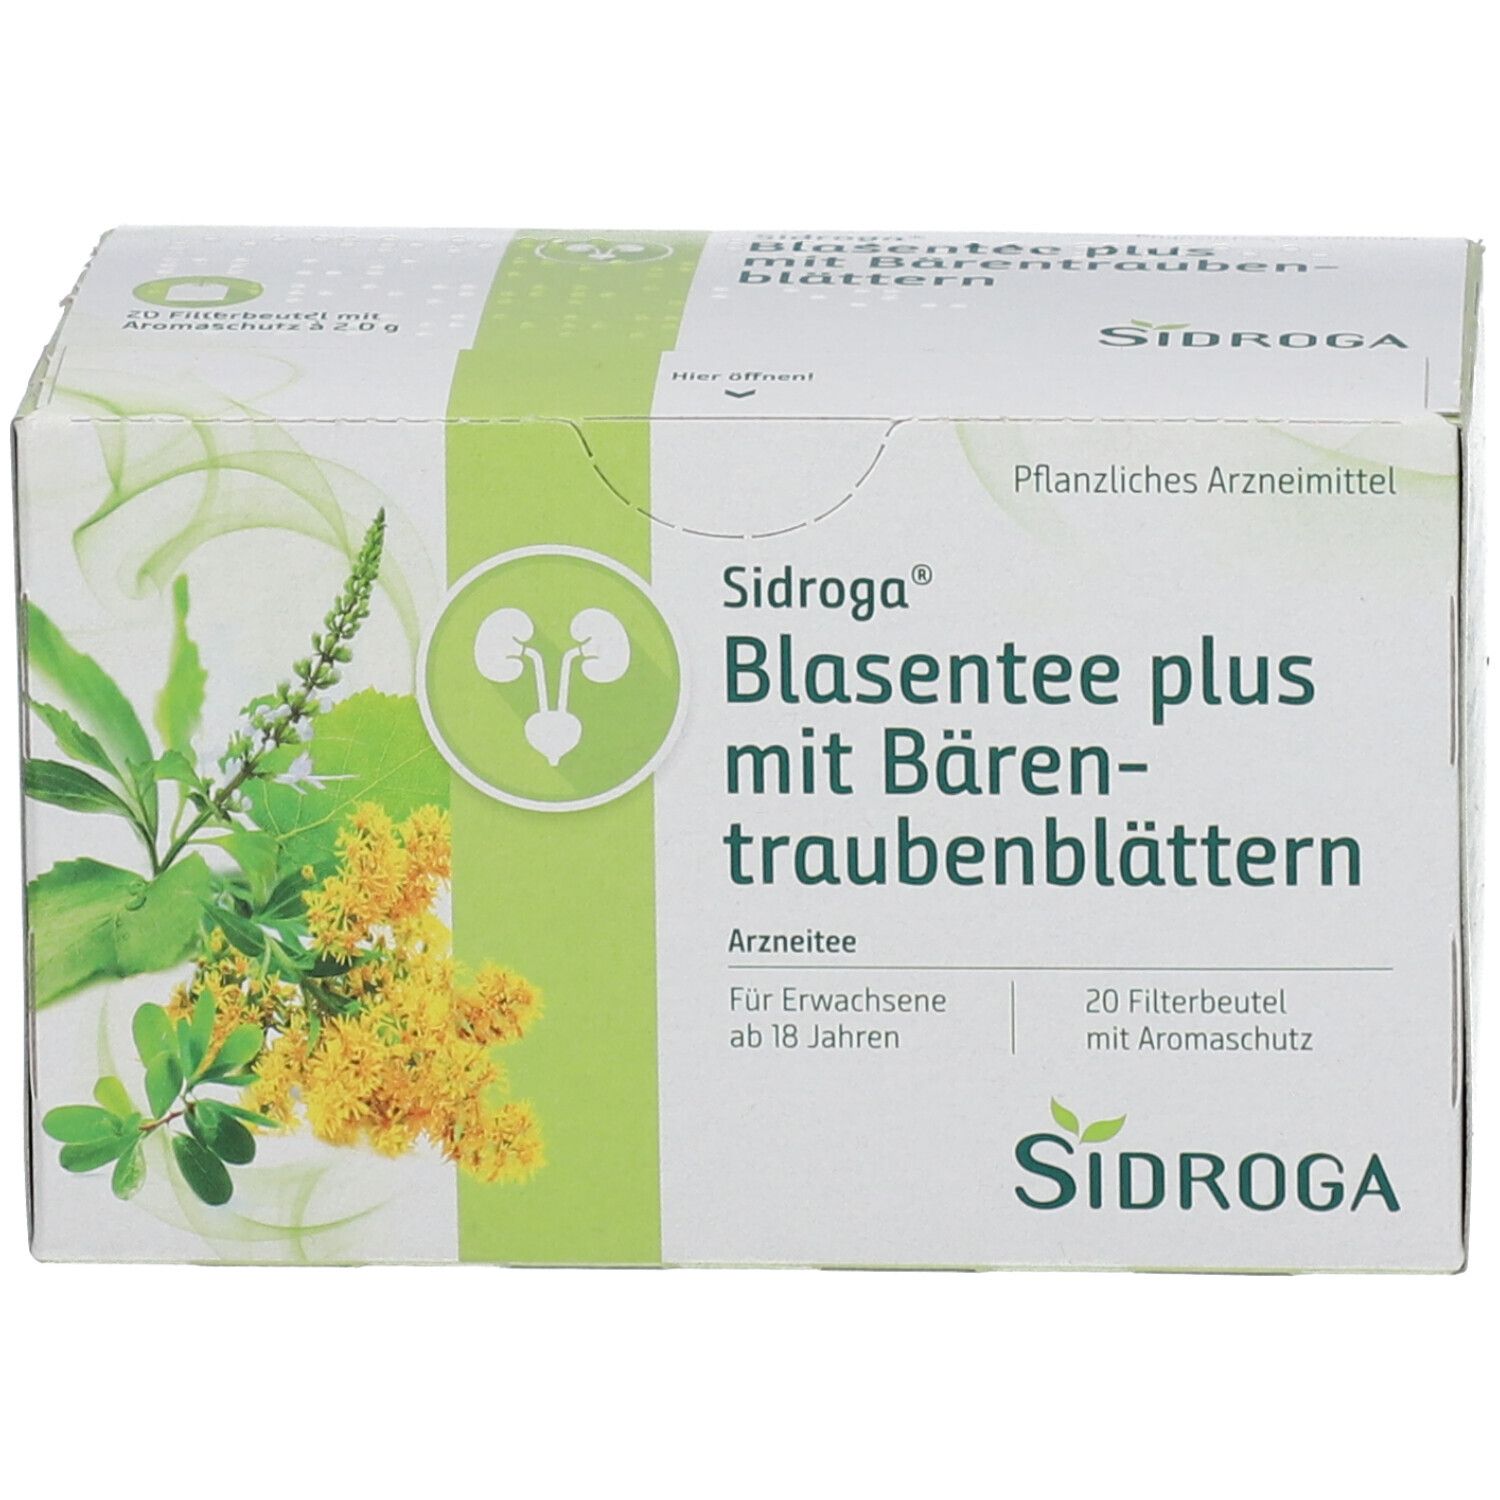 Sidroga® Blasentee plus mit Bärentraubenblättern